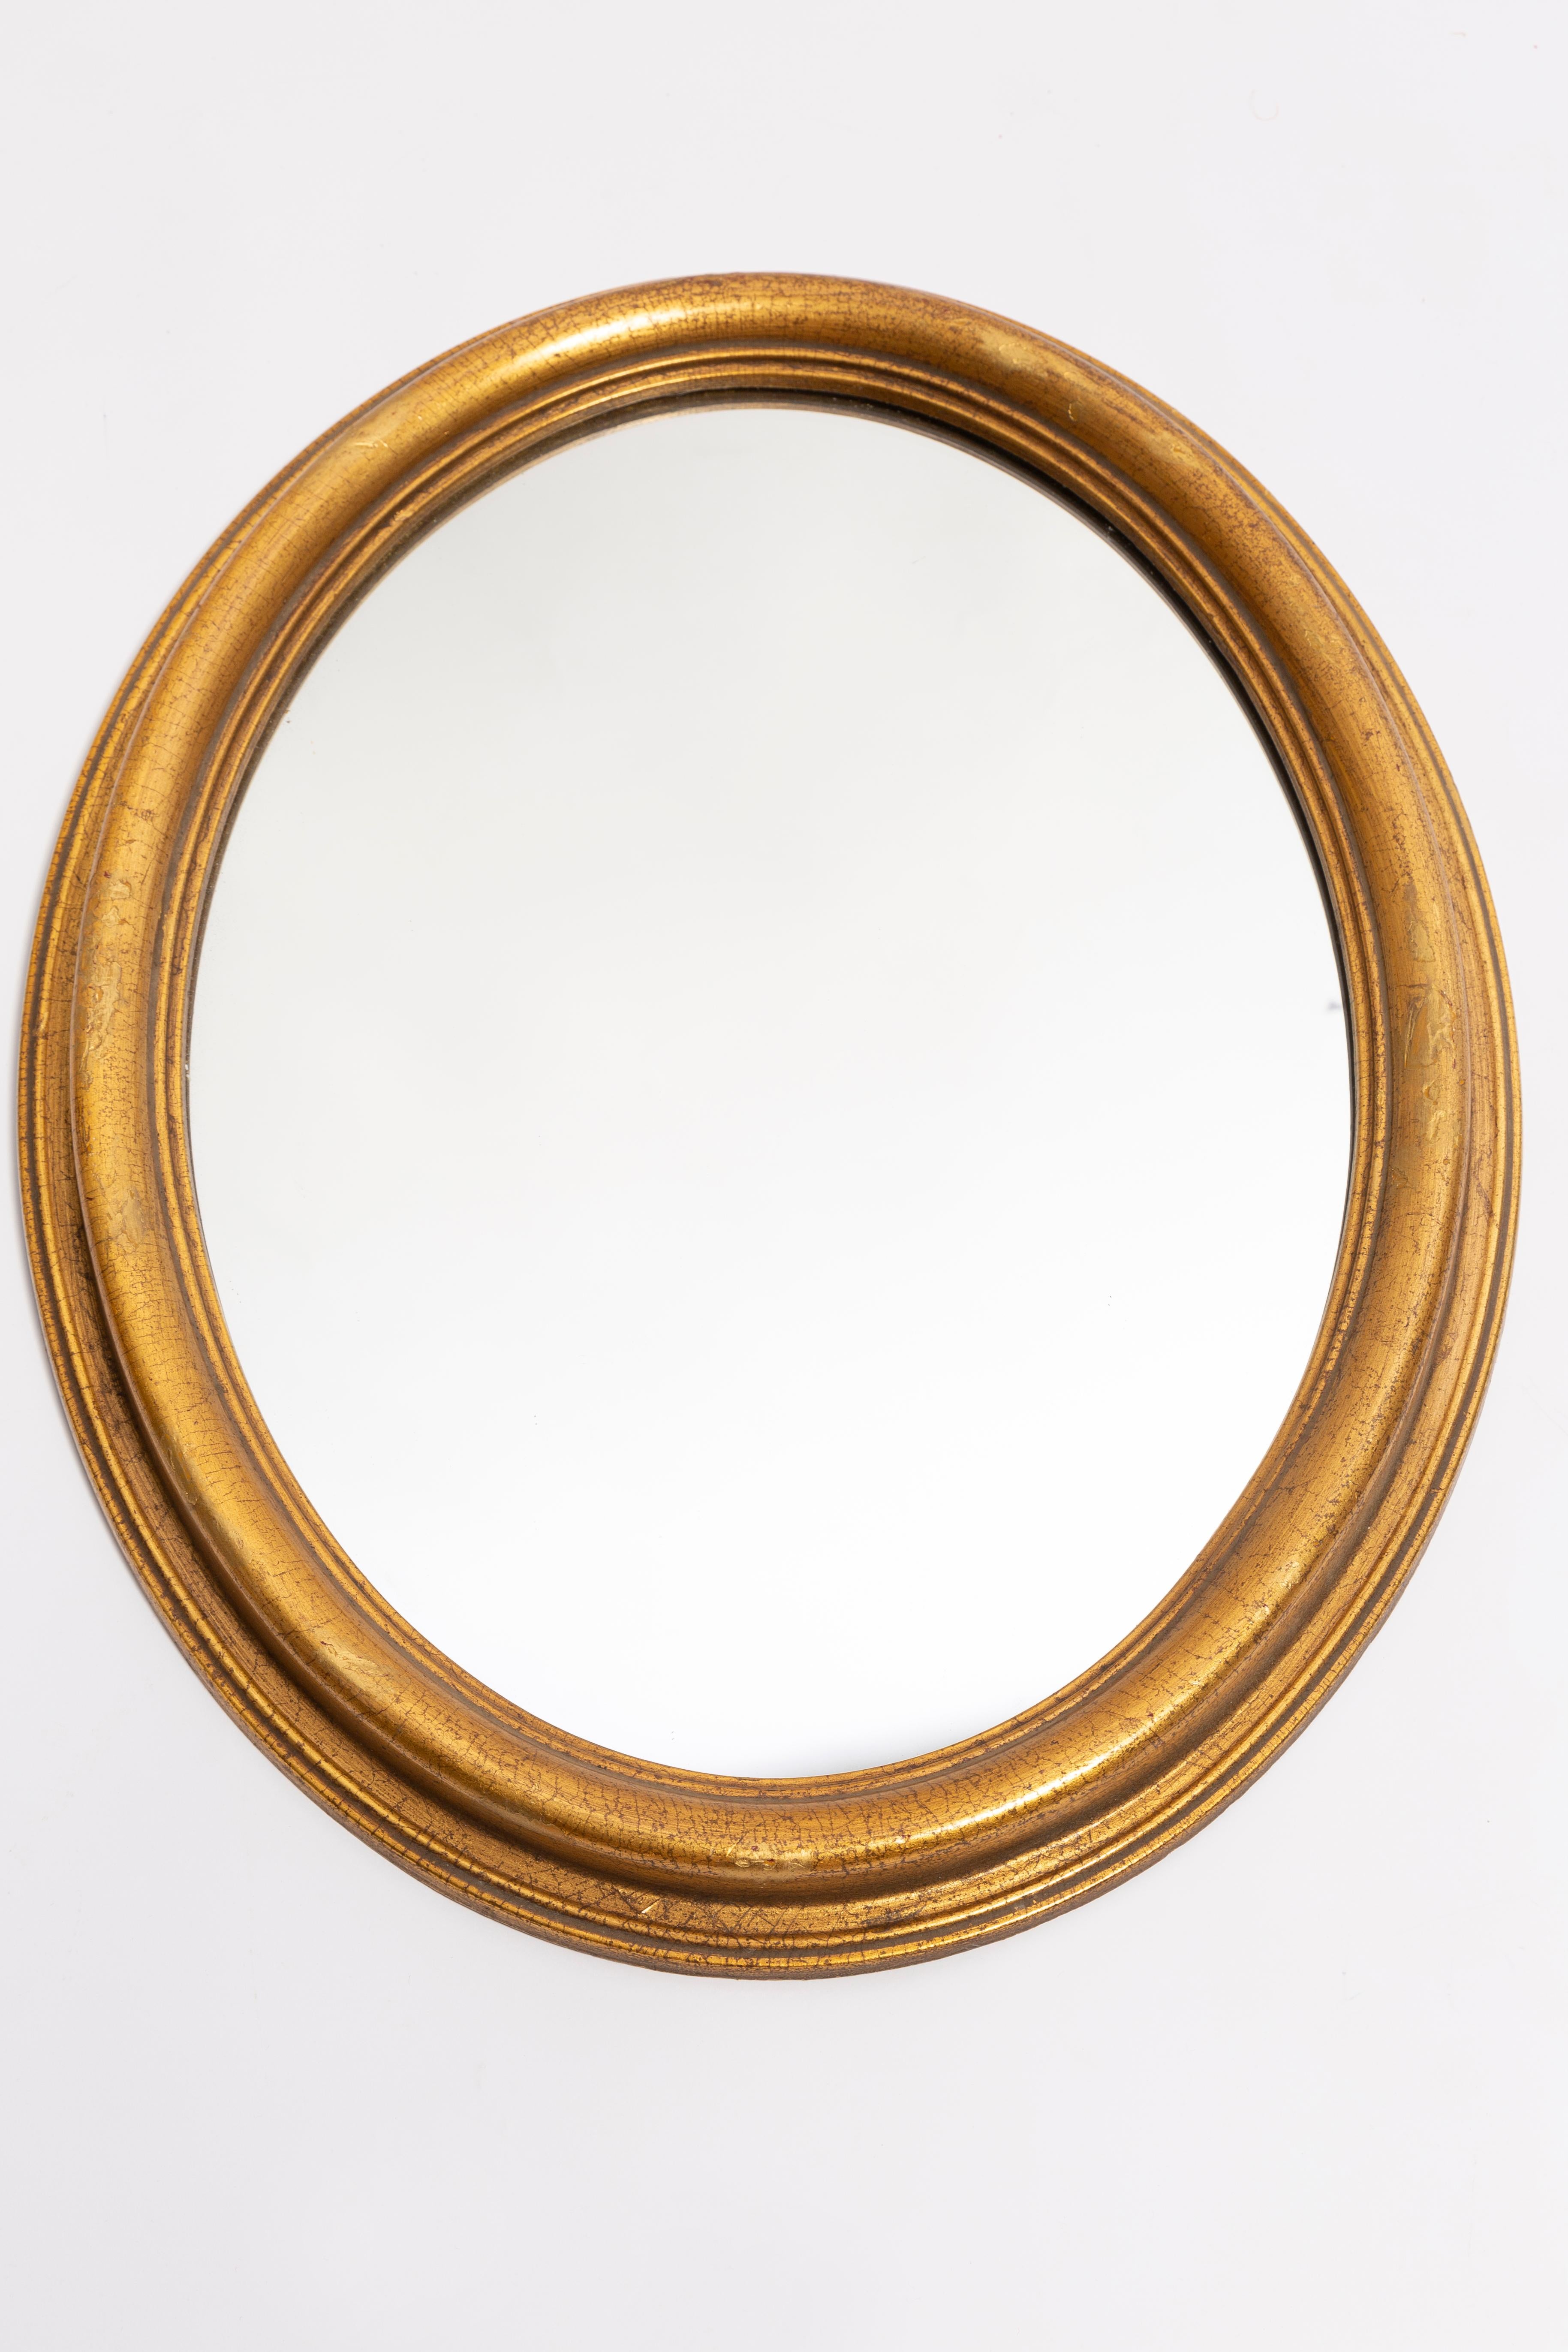 20th Century Mid Century Decorative Mirror in Golden Wood Frame, Italy, 1960s